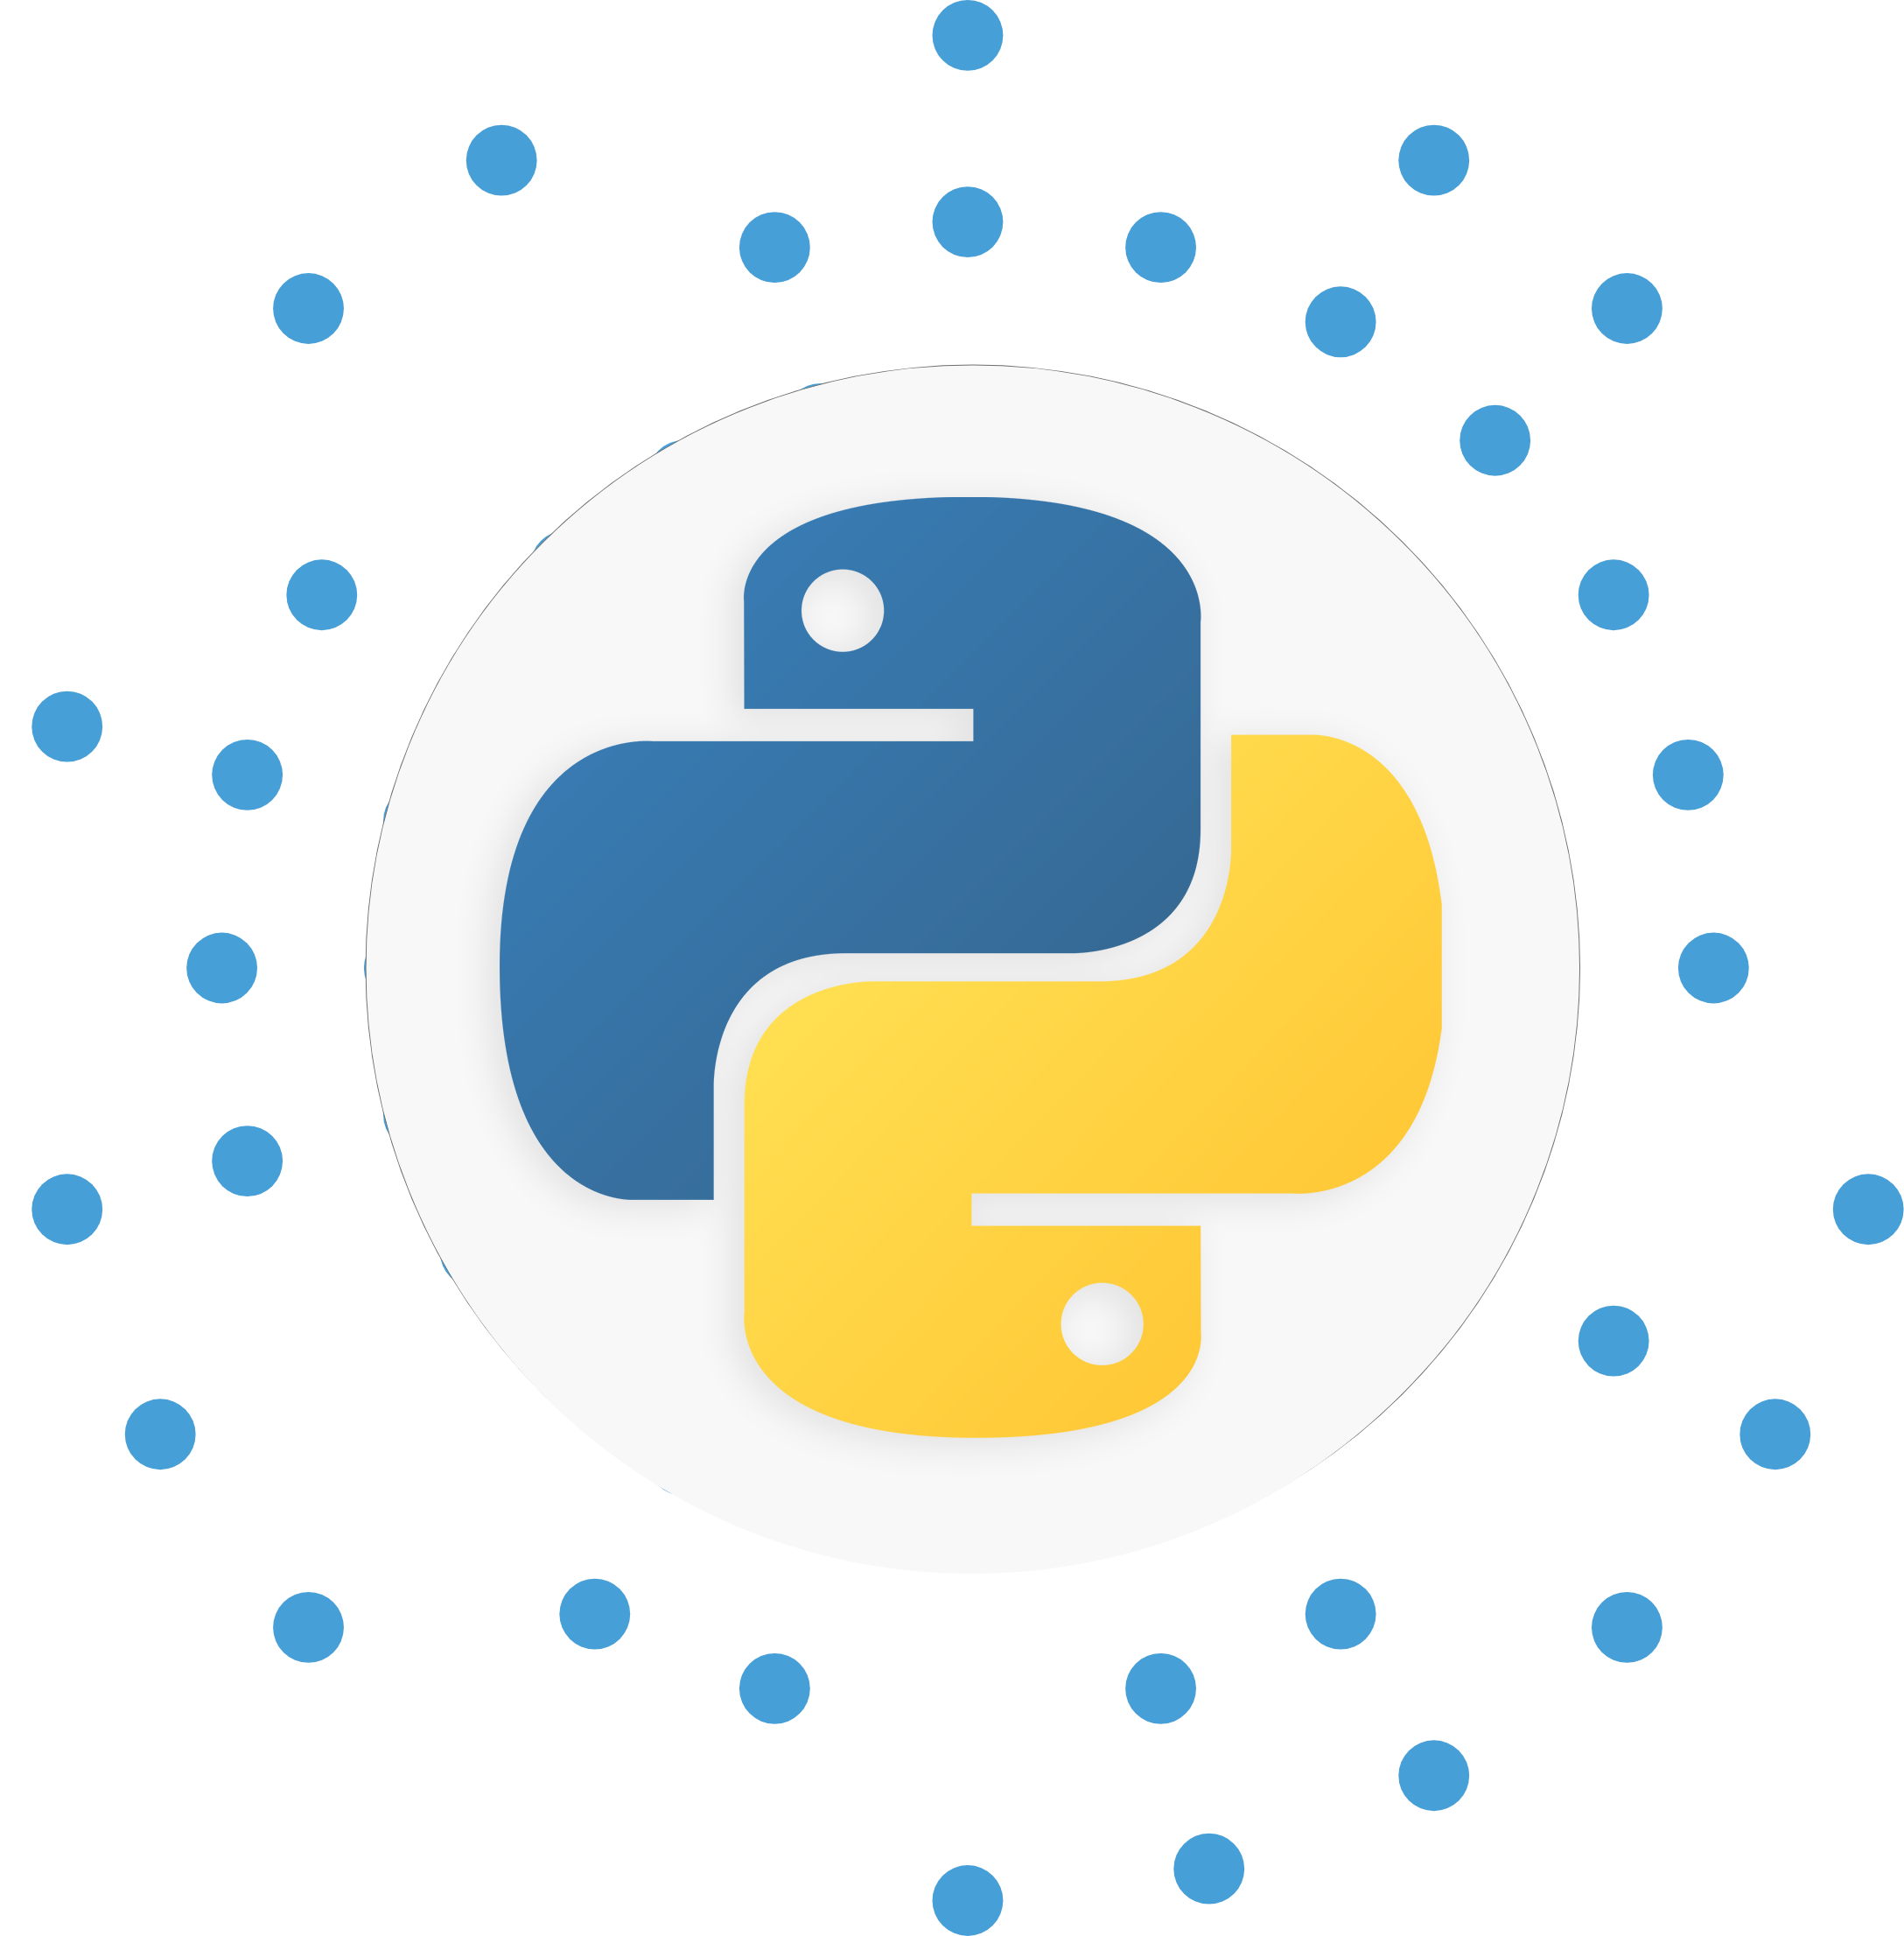 Python Training Course Icon